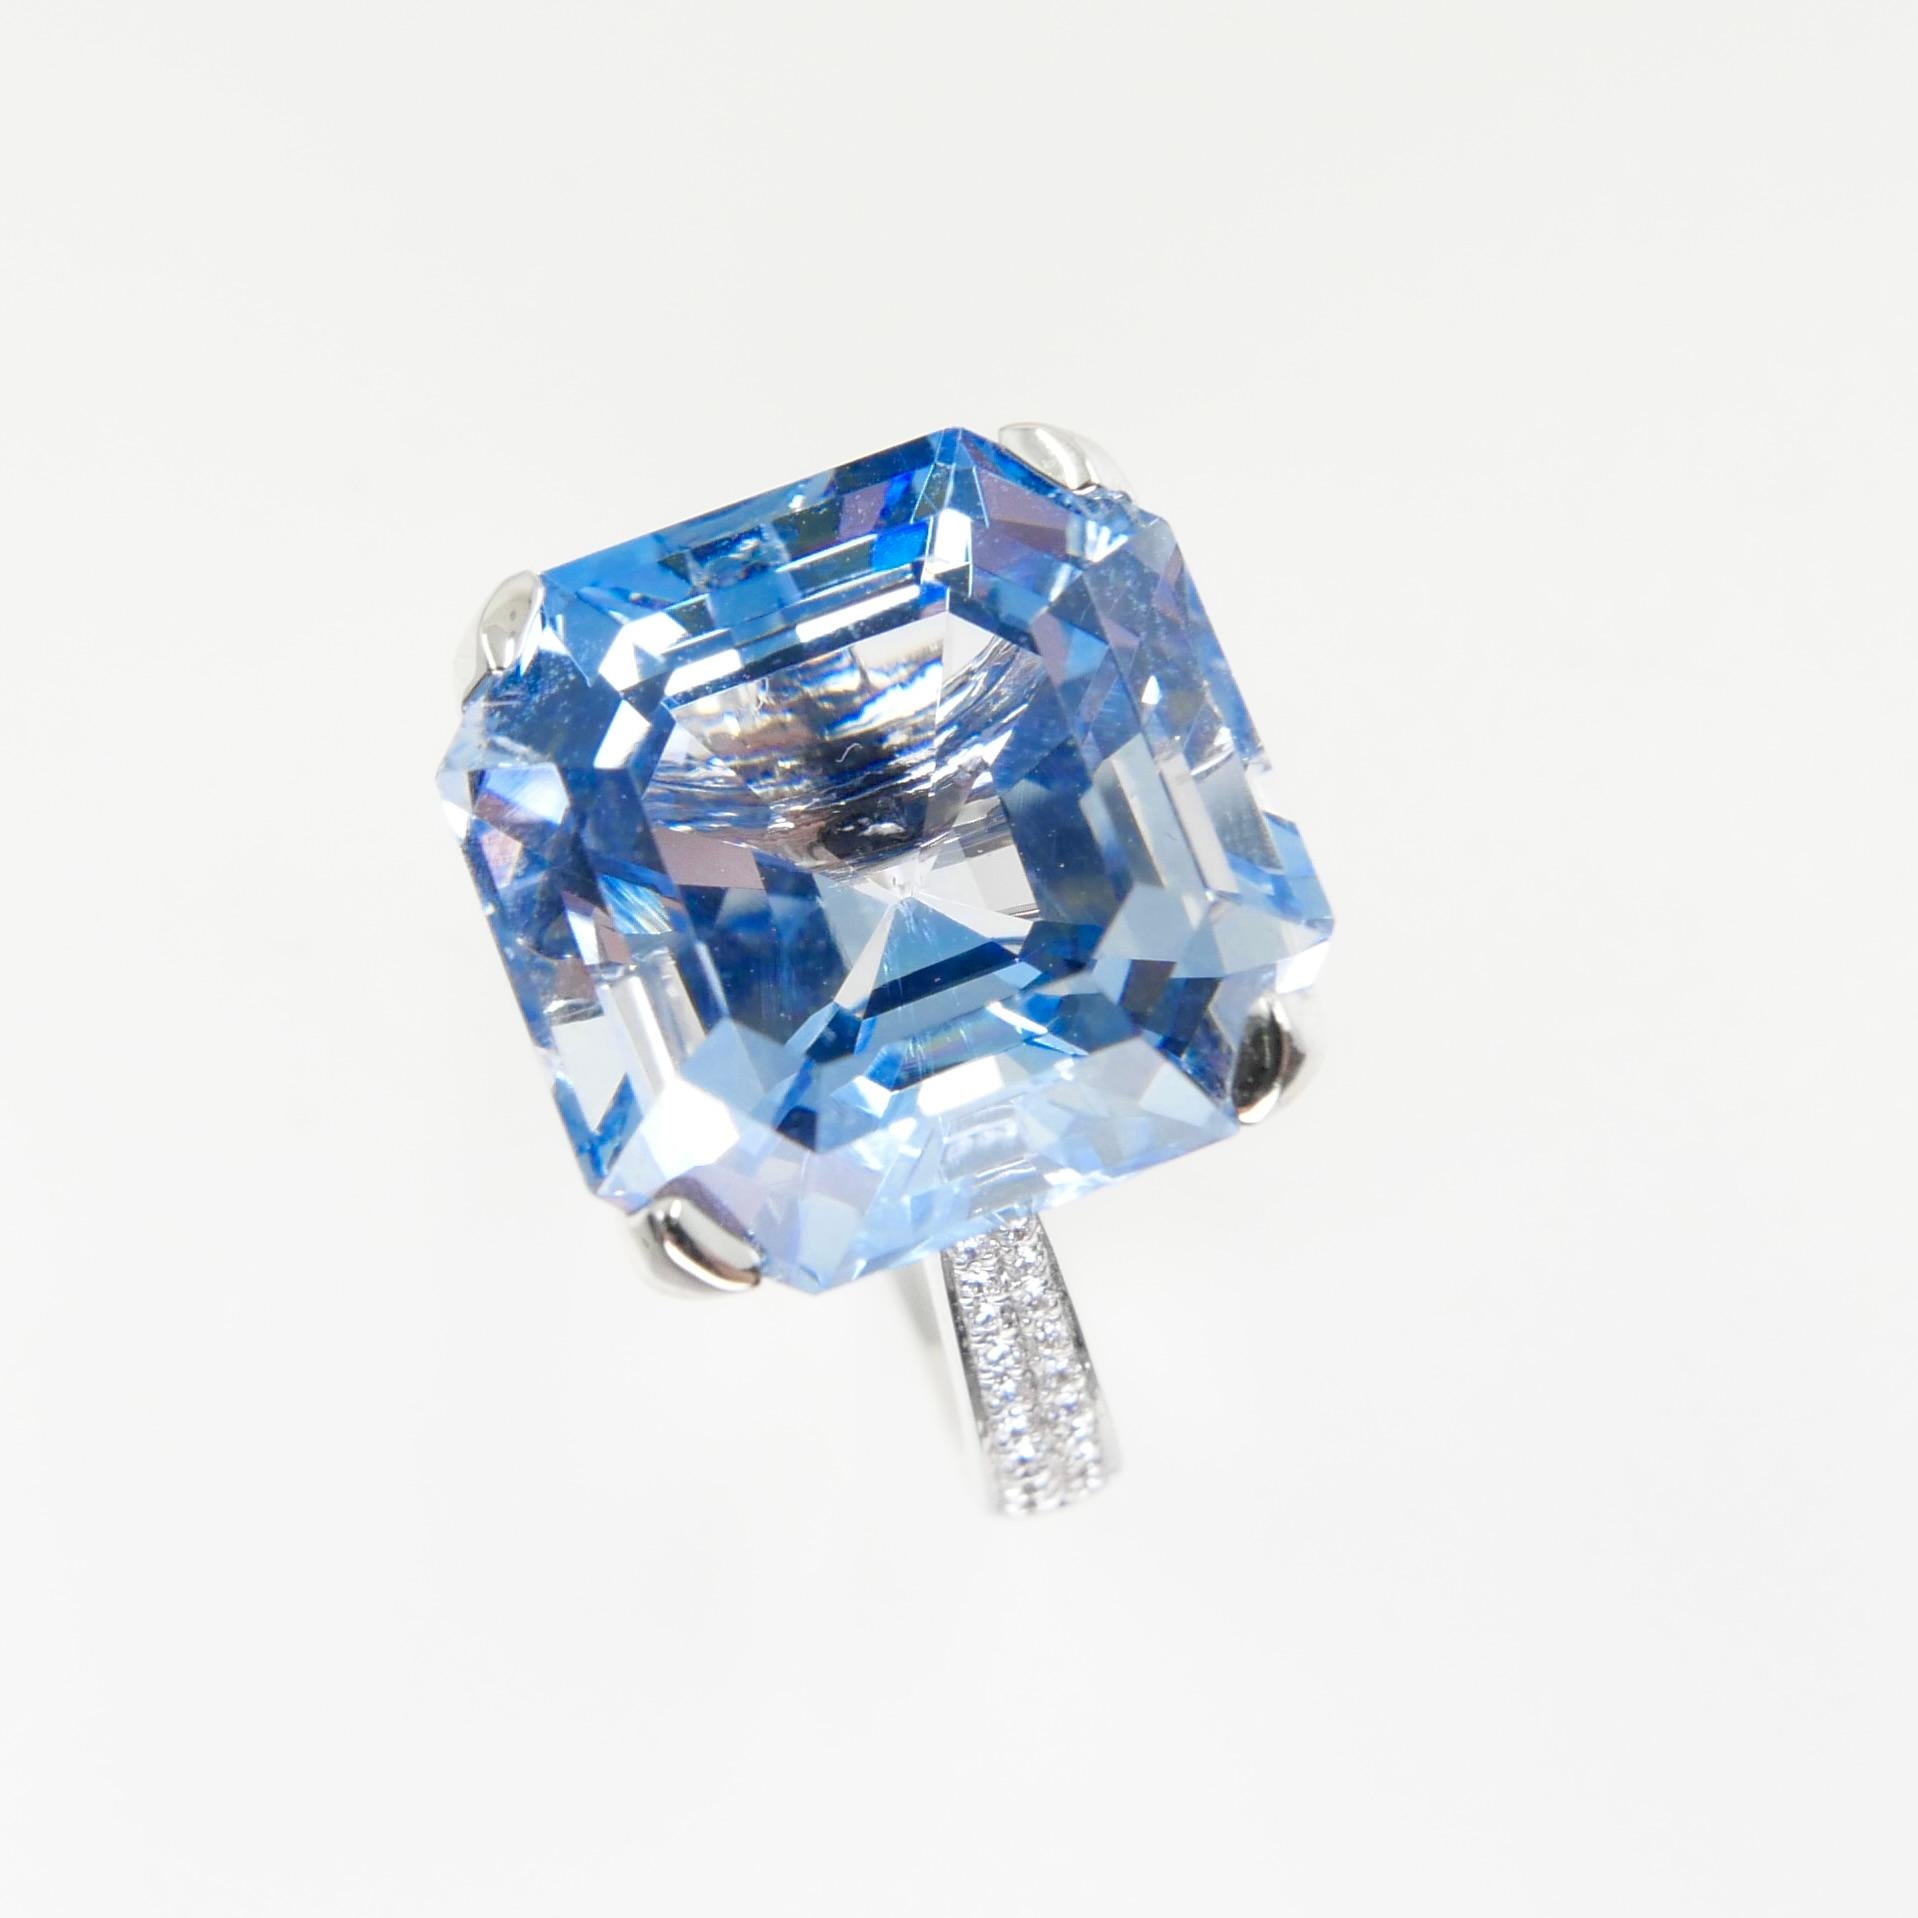 Certified 11.23 Cts Asscher Cut Aquamarine Diamond Ring, True Santa Maria Color 6